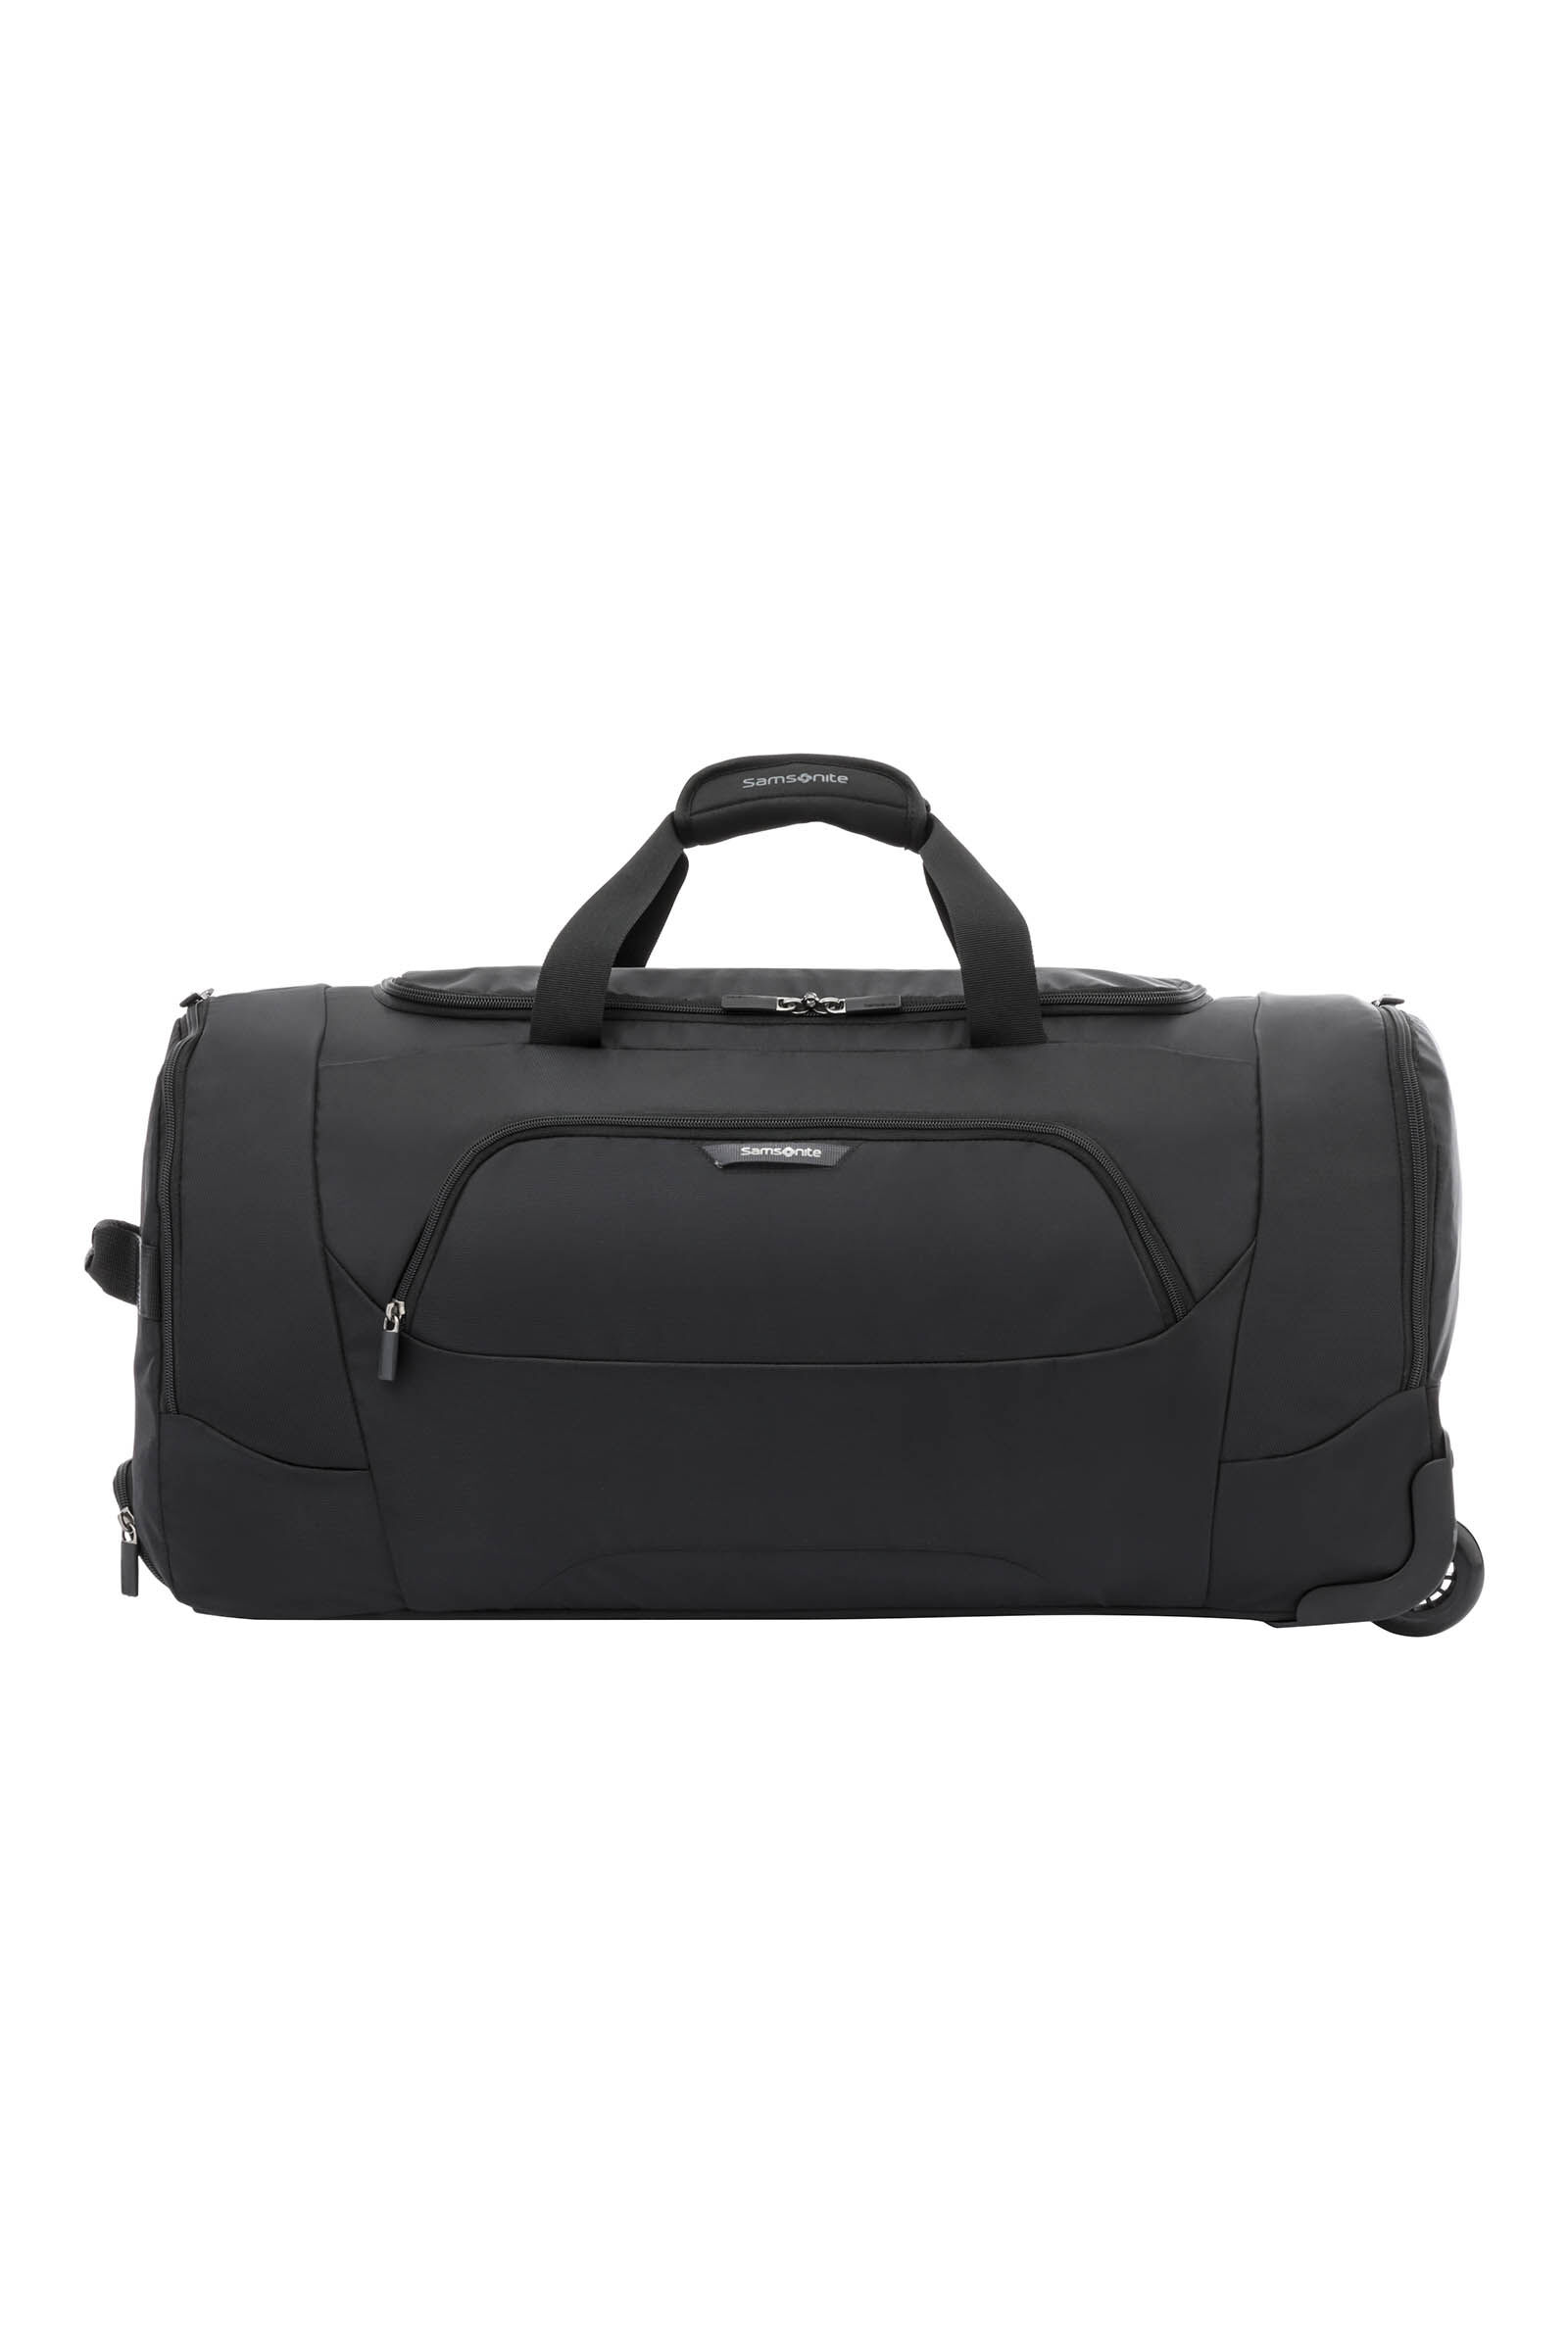 Buy Samsonite Toteaton 325 Inch Duffle Luggage Black One Size online   Looksgudin